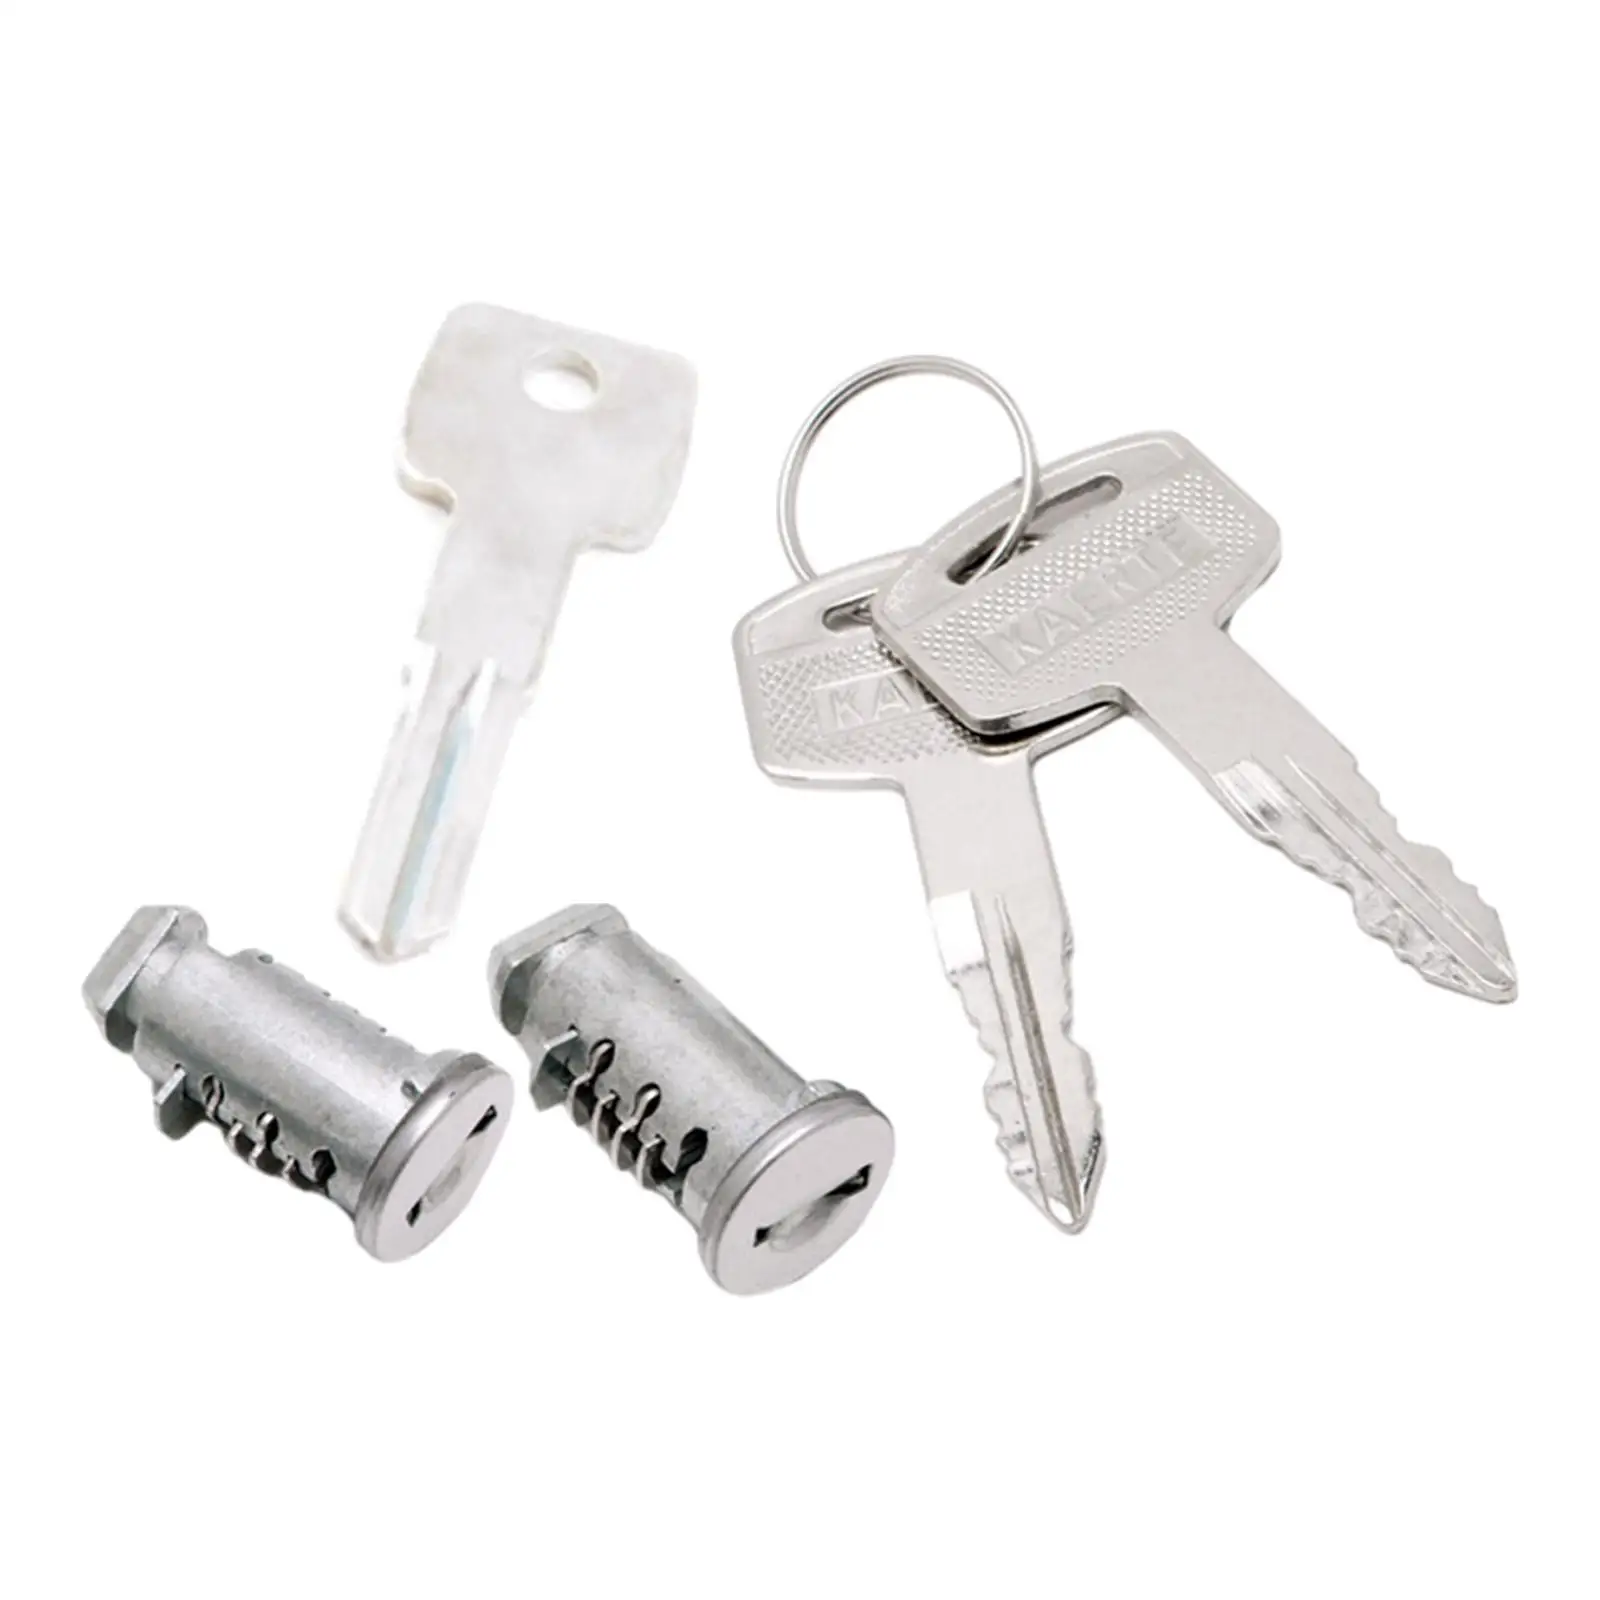 2 Pieces Lock Cylinders for Car Racks System Accessory Roof Rack Cross Bars Lock Key Kit for Car Rack Locks